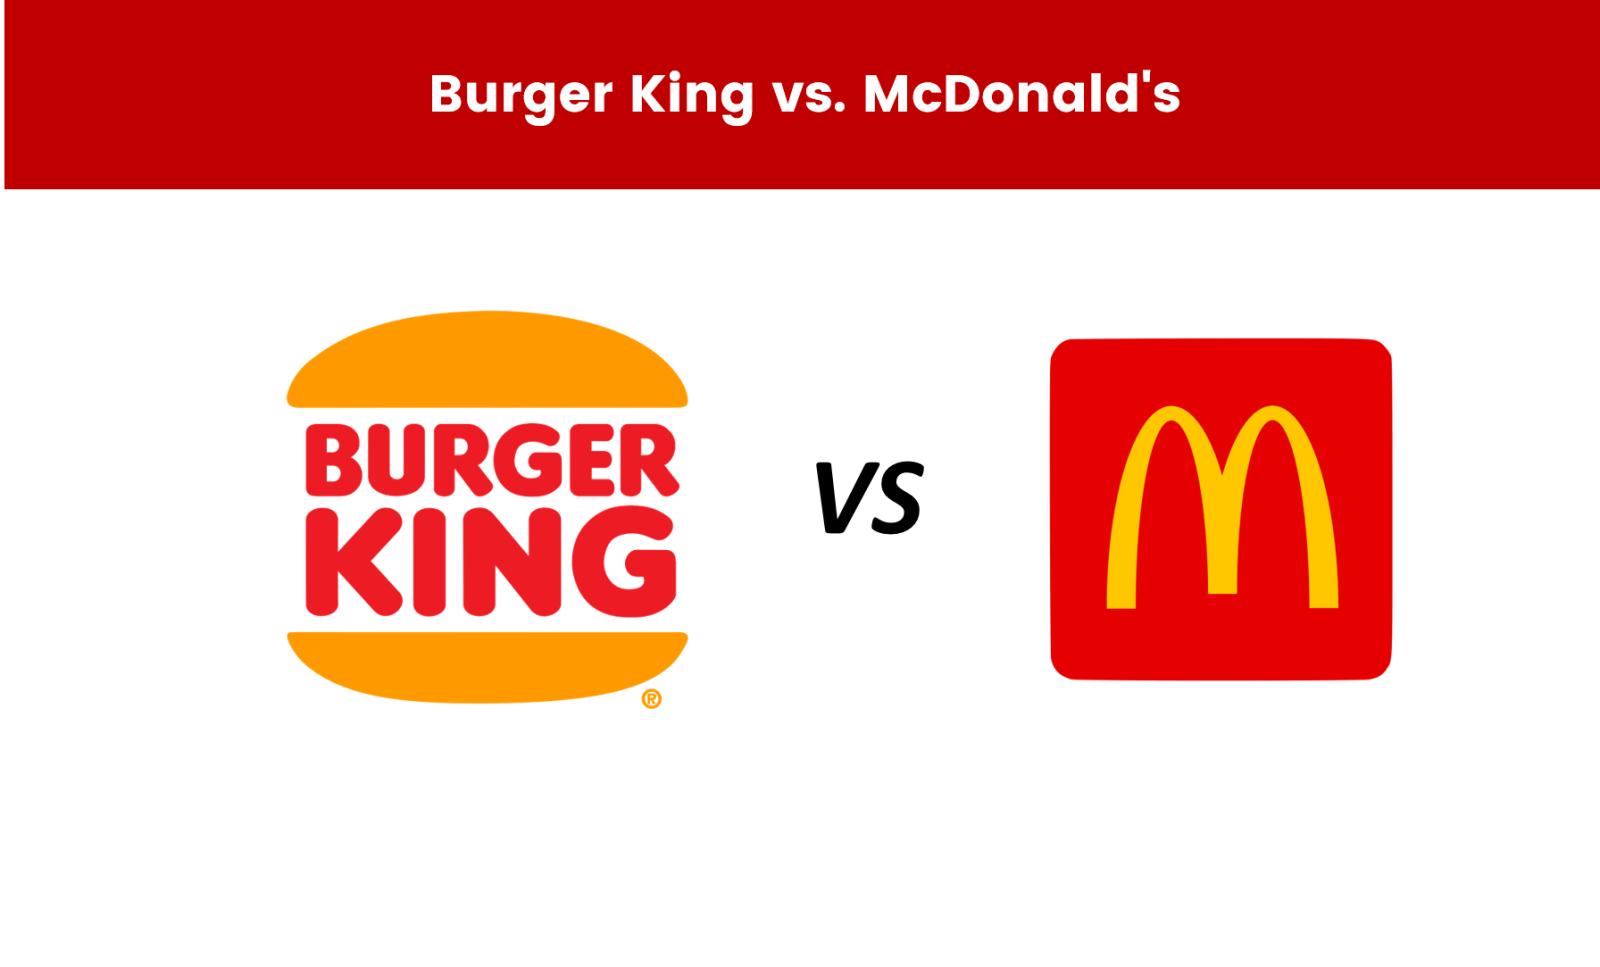 Burger King vs. McDonald's
